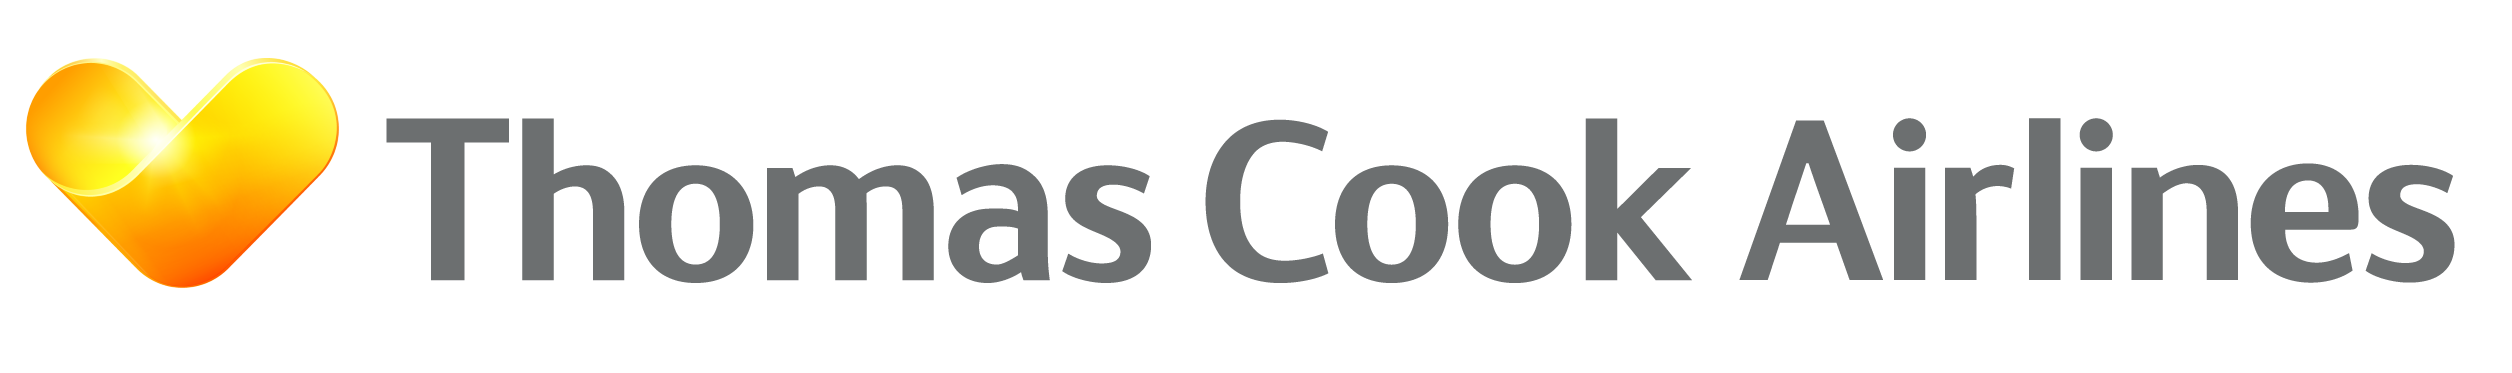 Thomas_Cook_Airlines_logo_logotype